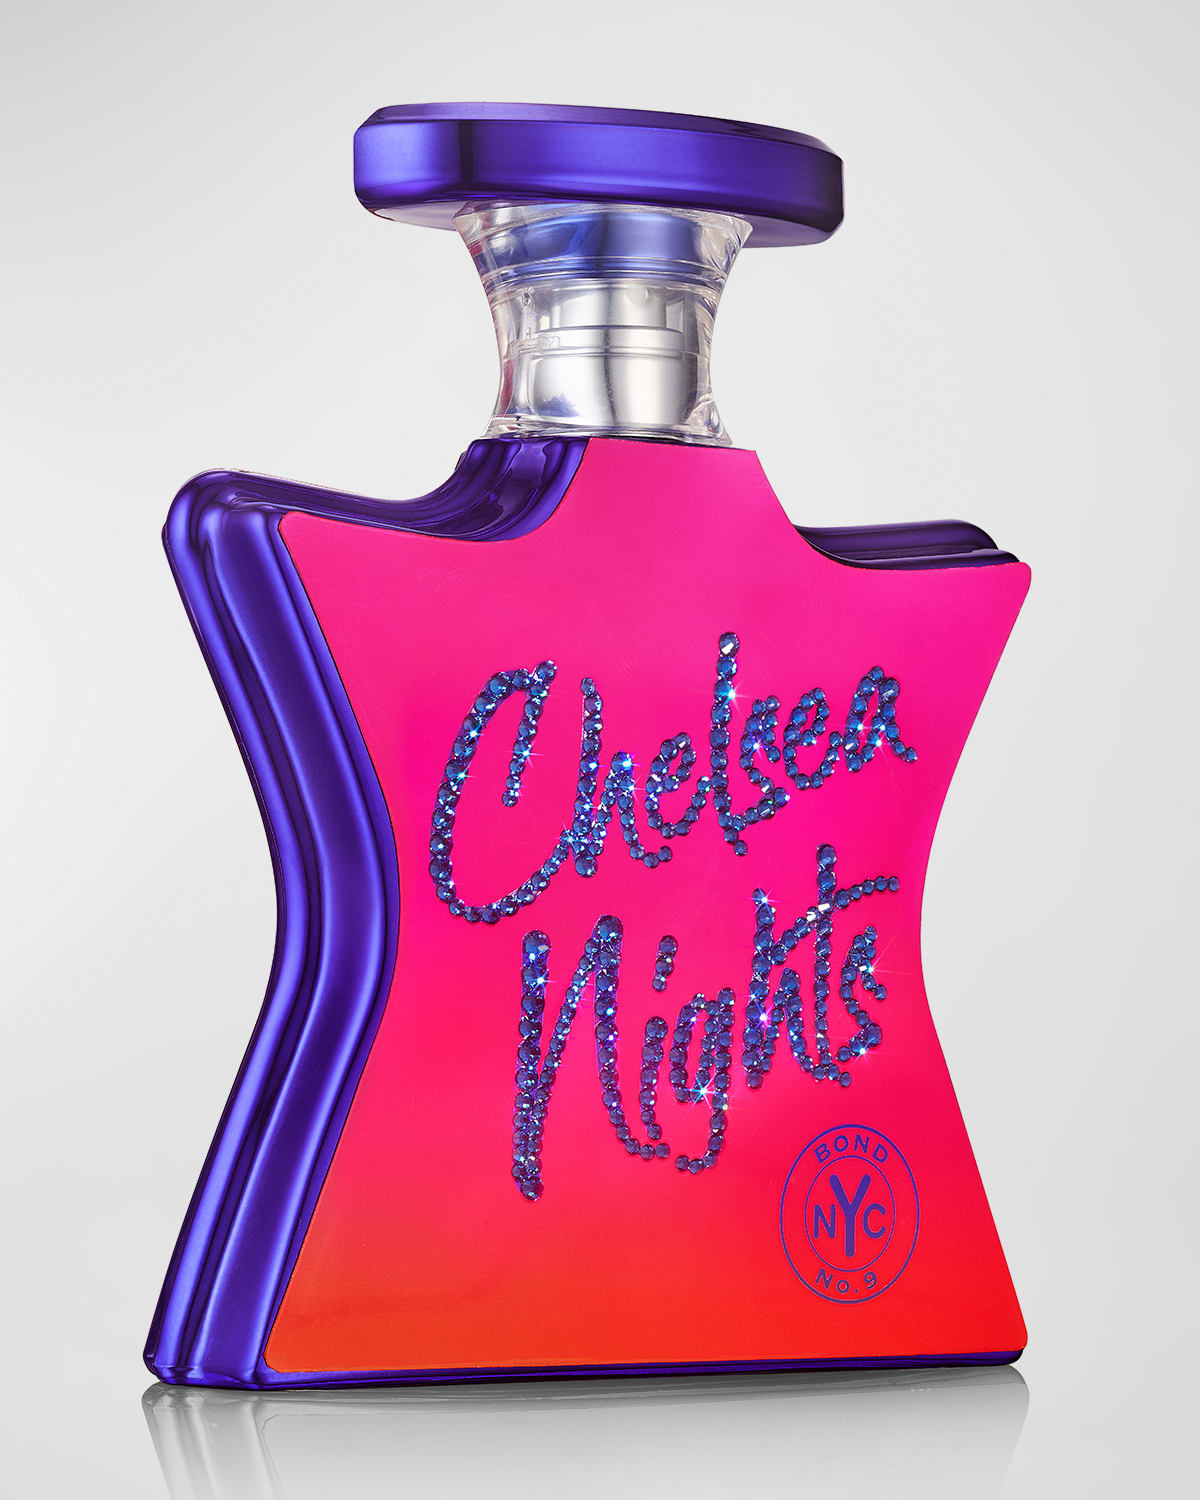 Bond No.9 New York Chelsea Nights Eau de Parfum - Limited Edition, 3.4 oz.